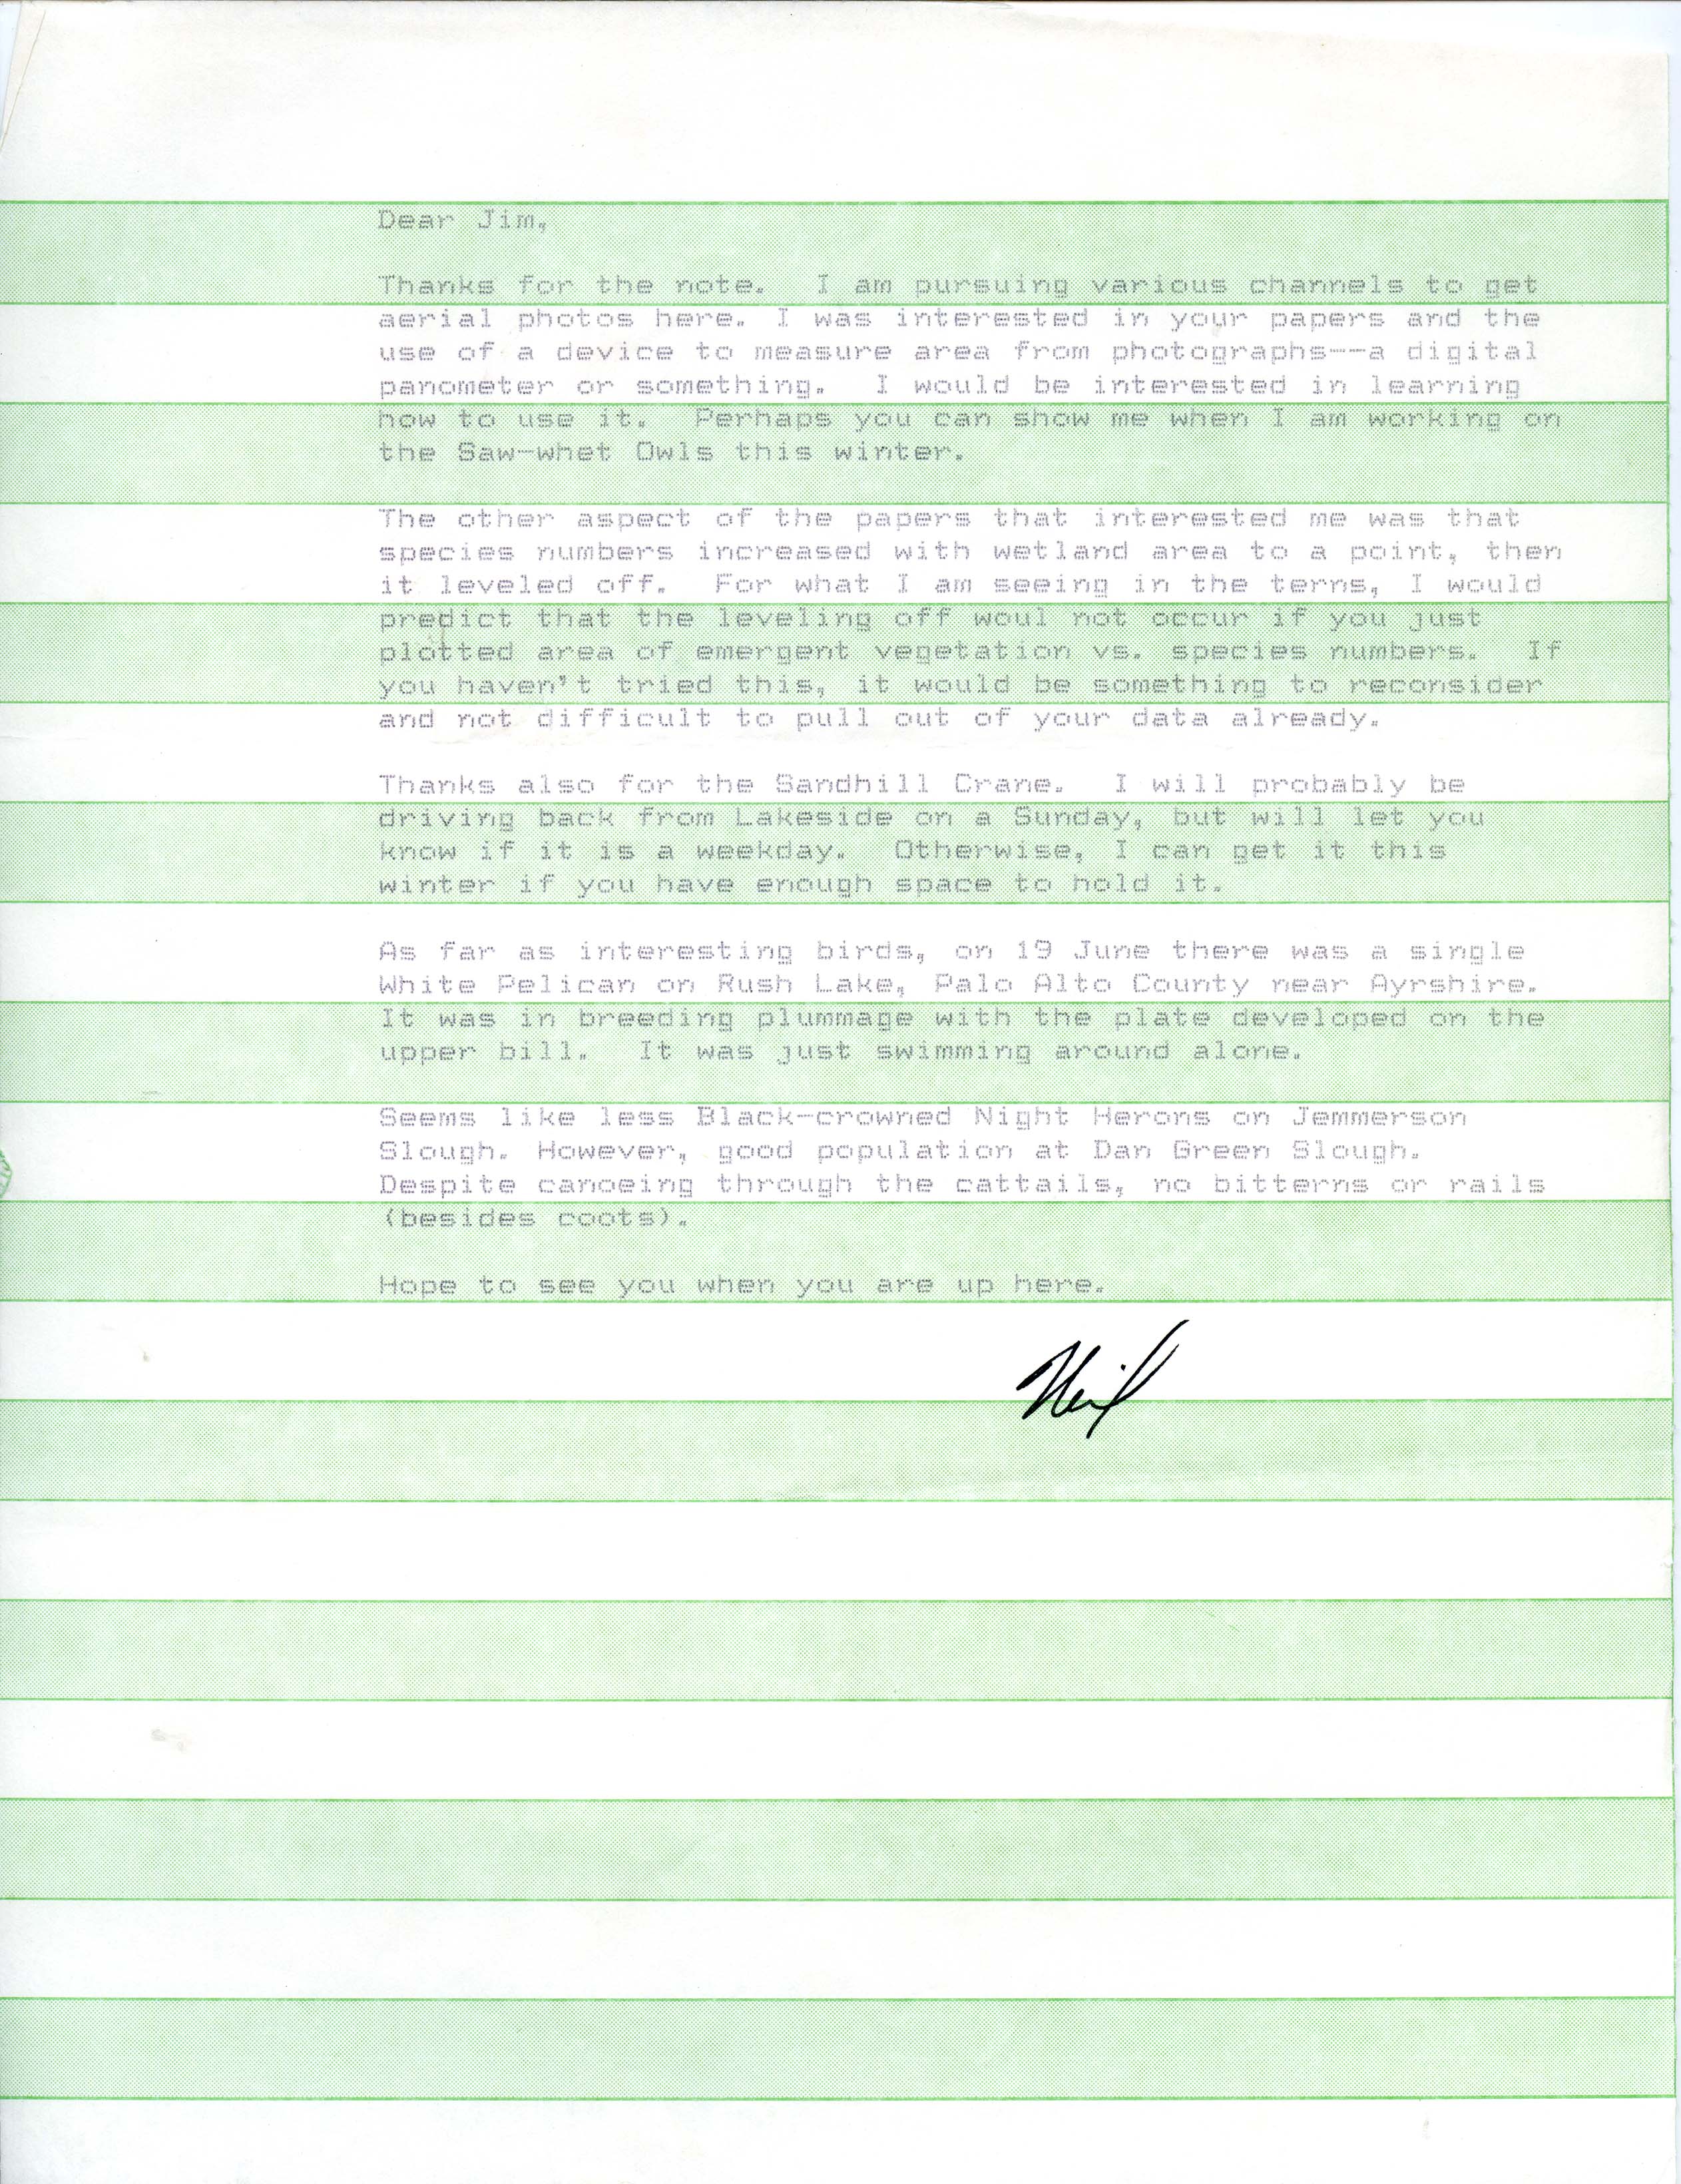 Neil Bernstein letter to James J. Dinsmore regarding personal papers, summer 1988